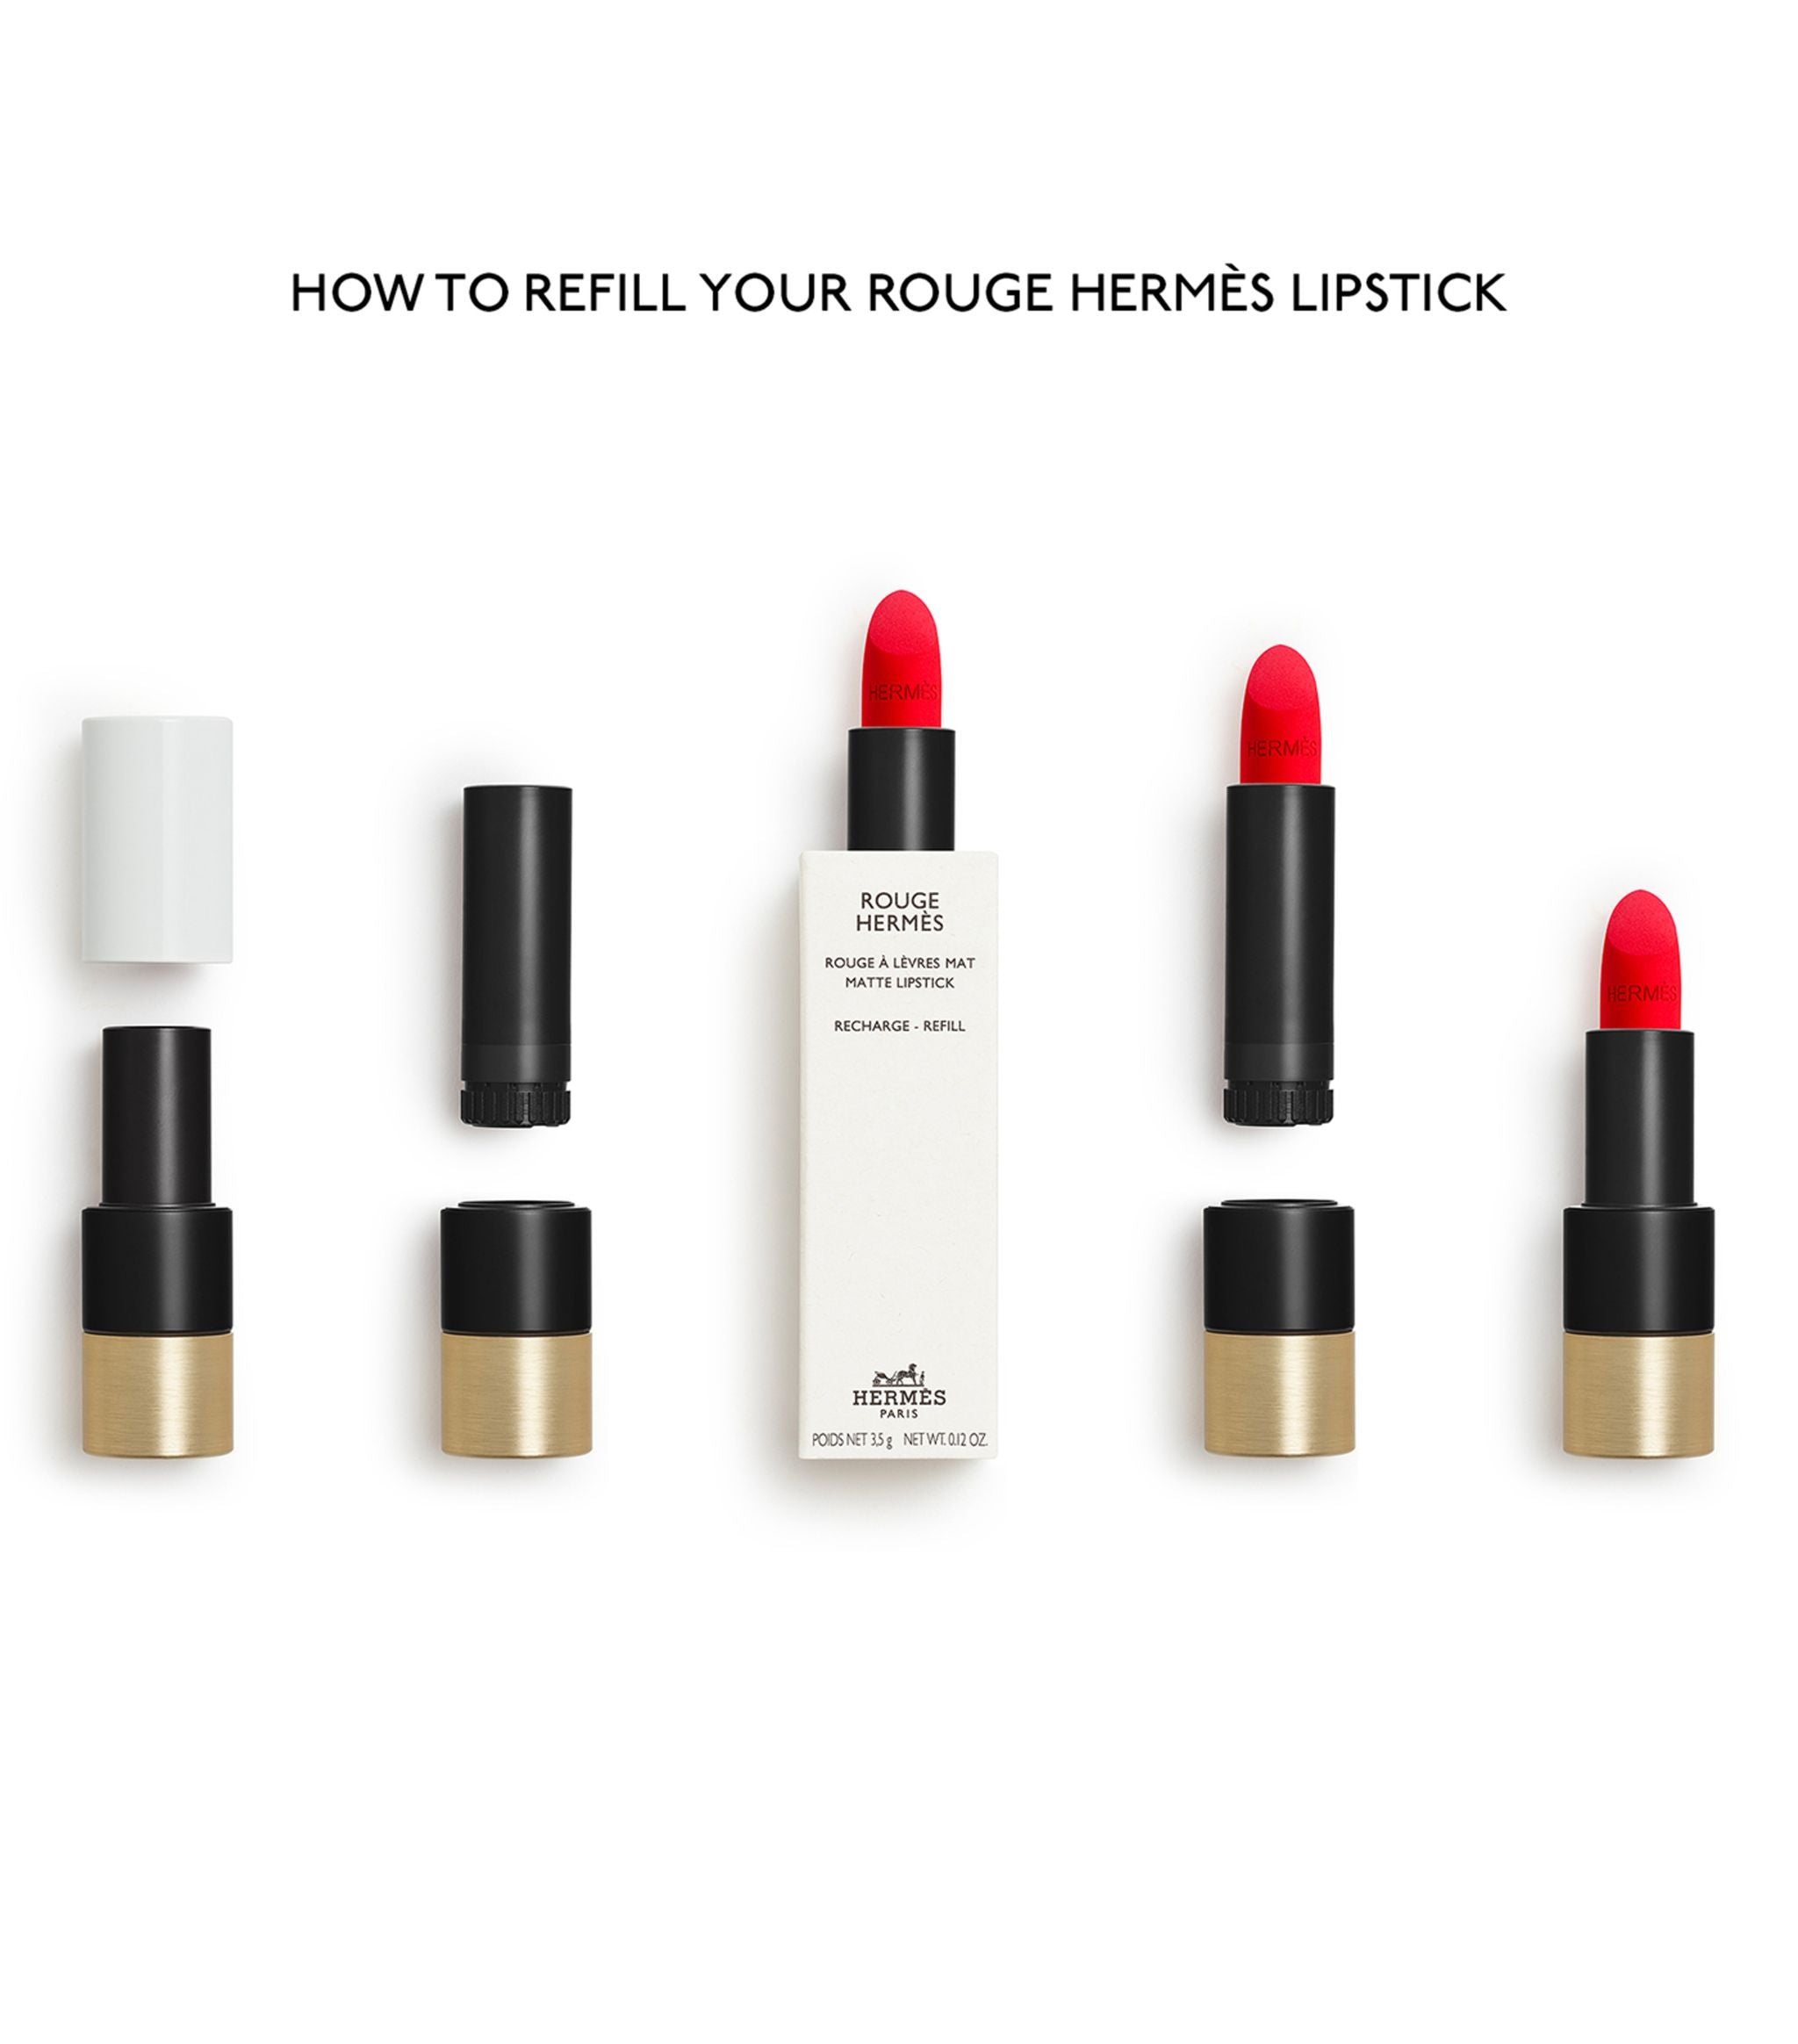 Hermes Beige Naturel (11) Rouge Matte Lipstick Review & Swatches